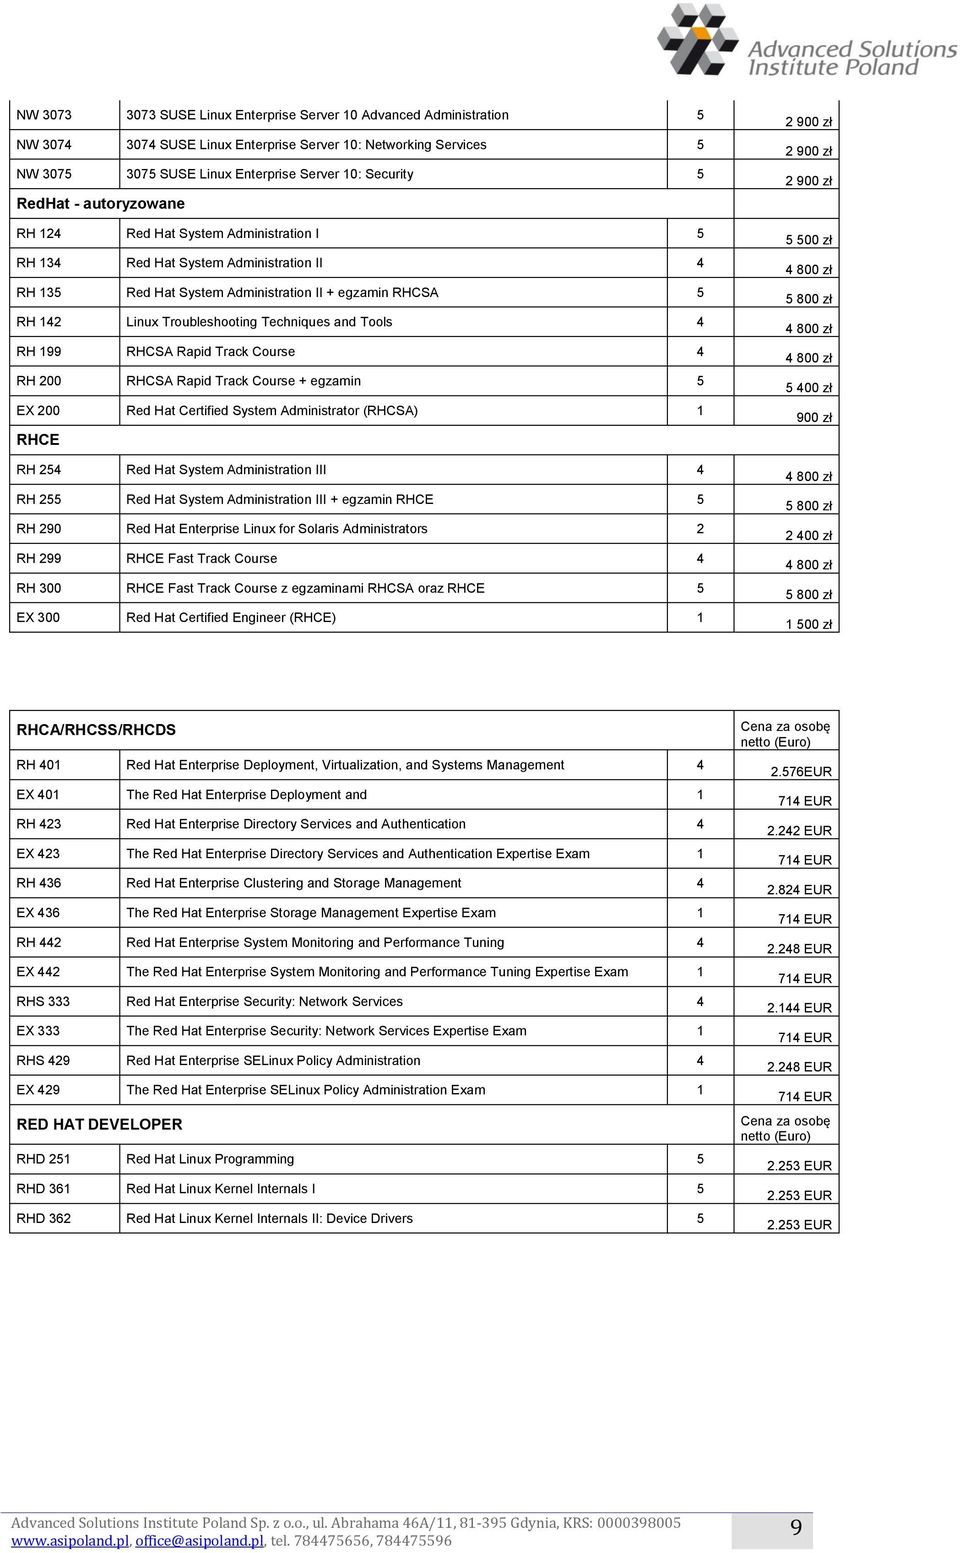 Techniques and Tools 4 RH 199 RHCSA Rapid Track Course 4 RH 200 RHCSA Rapid Track Course + egzamin 5 EX 200 Red Hat Certified System Administrator (RHCSA) 1 RHCE RH 254 Red Hat System Administration